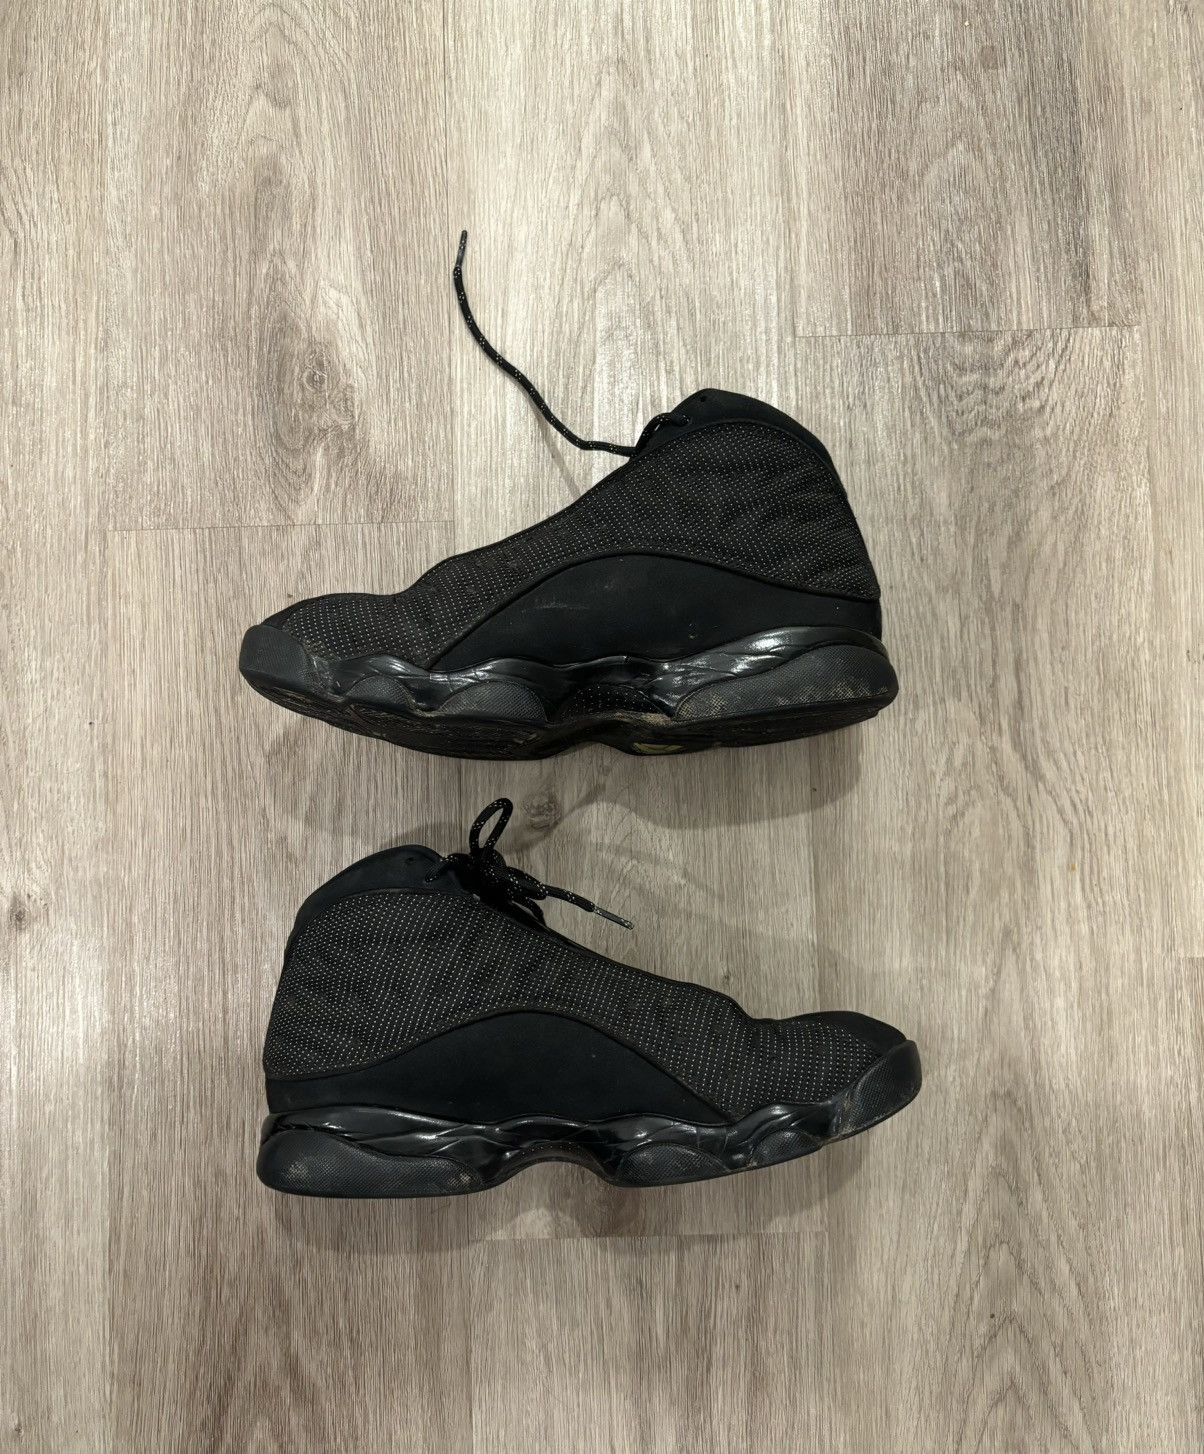 Nike Jordan 13 black cat Size US 10.5 / EU 43-44 - 2 Preview